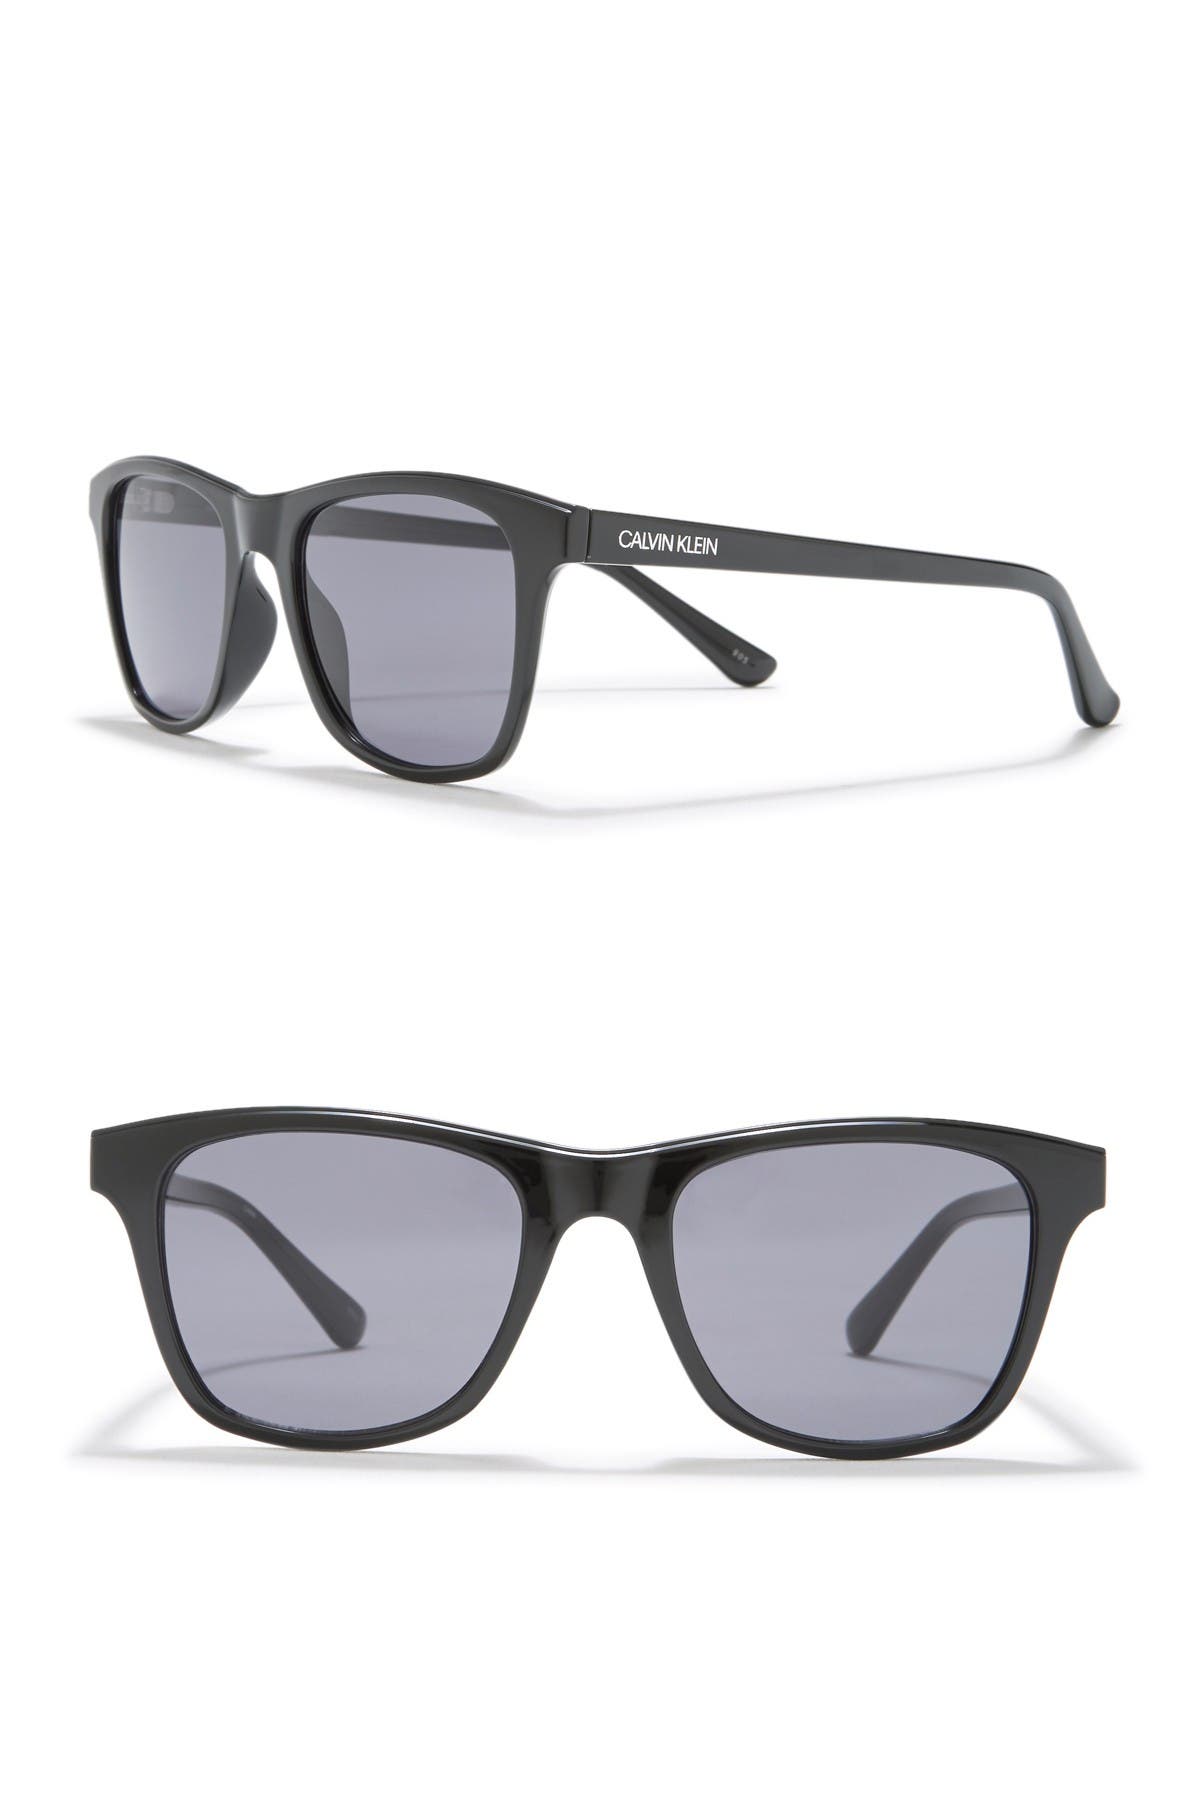 Calvin Klein Sunglasses Nordstrom Rack Poland, SAVE 53% 